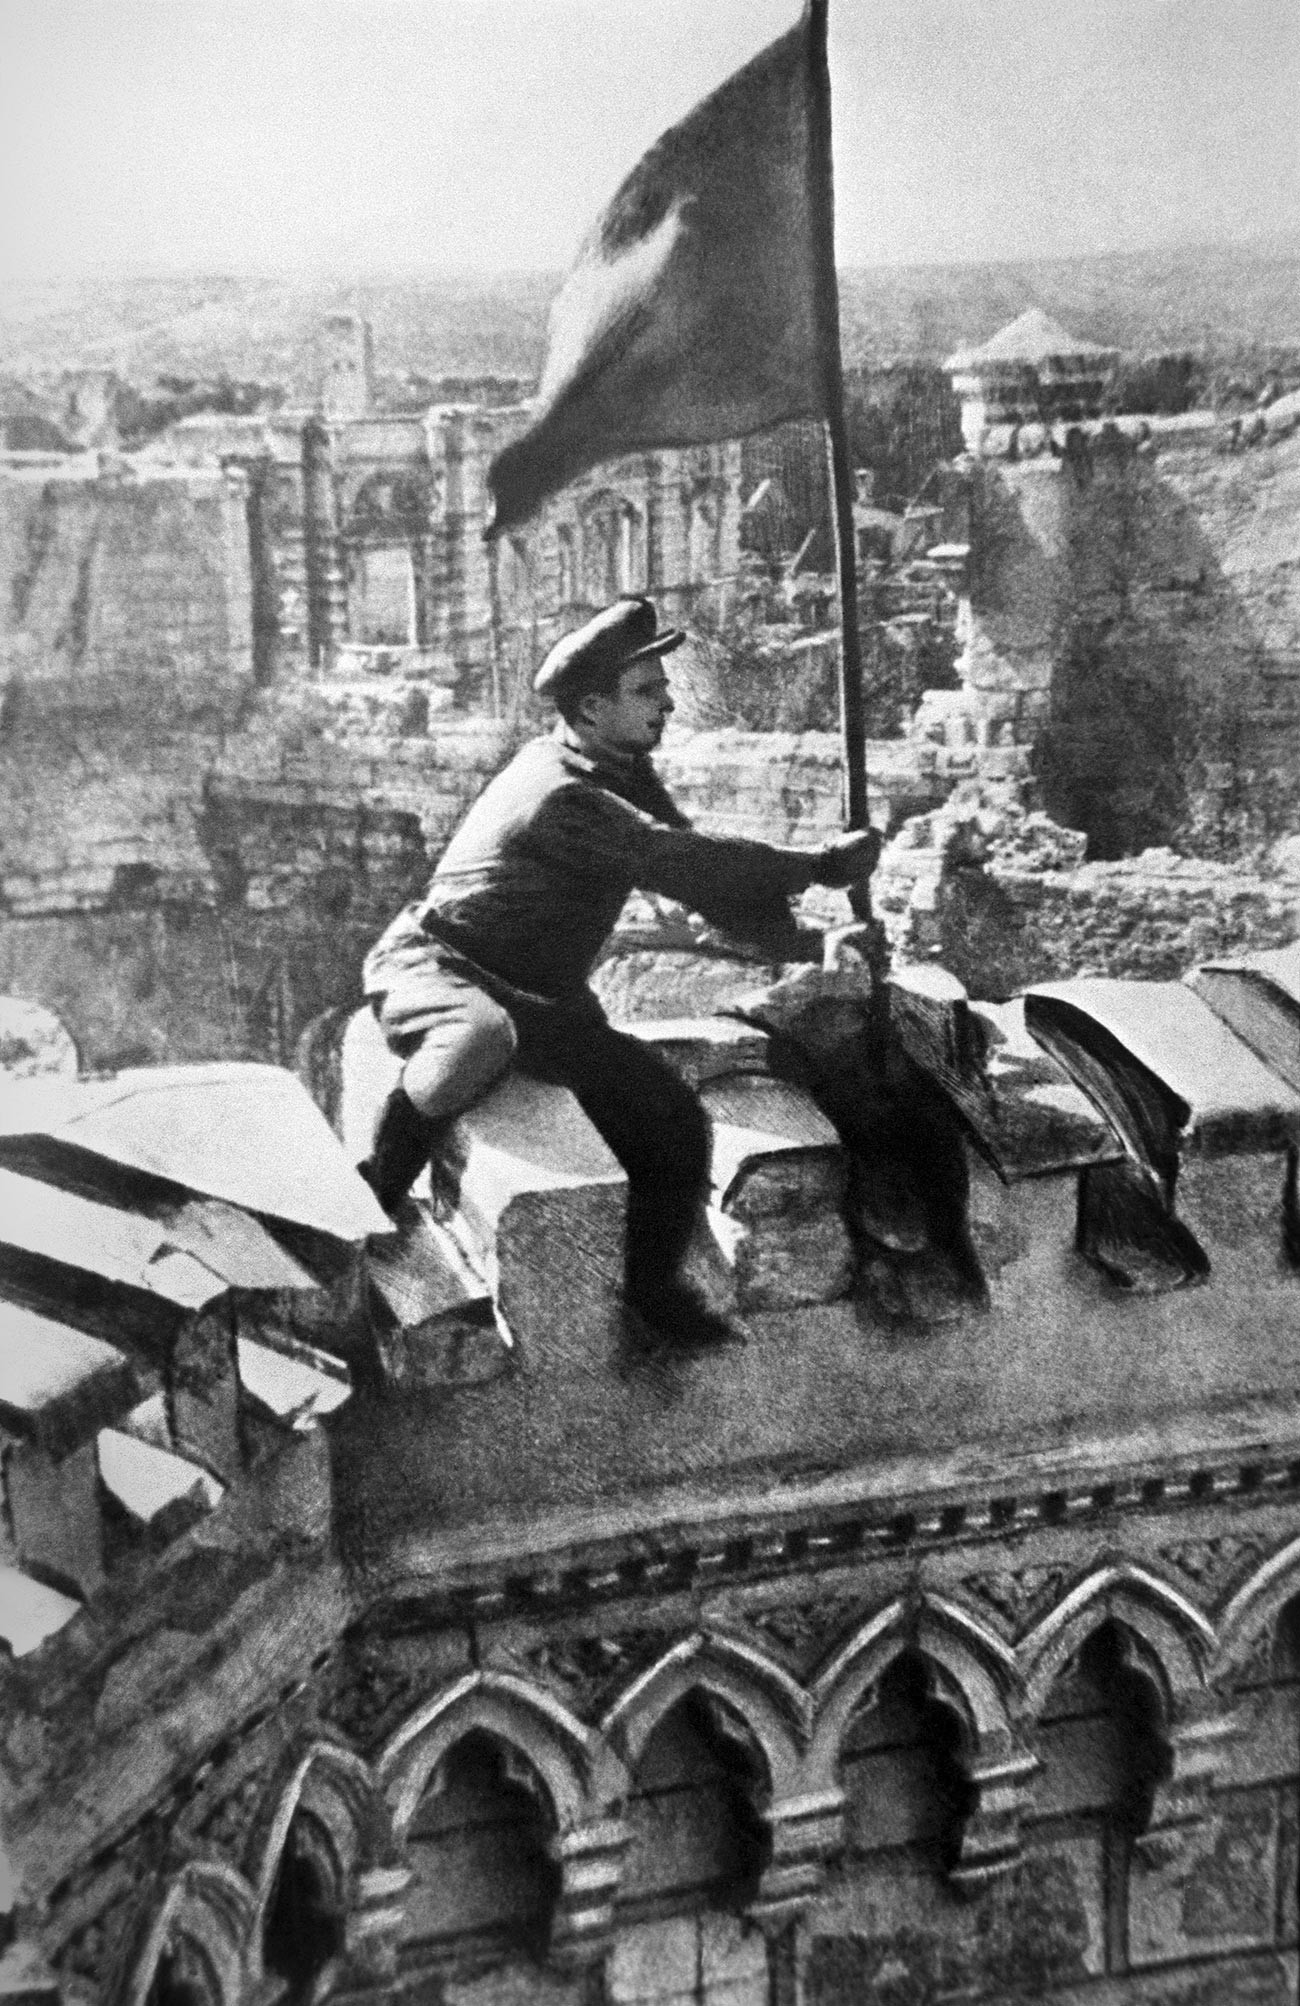 Razobešanje prapora zmage nad osvobojenim Kišinjevom, 1944

